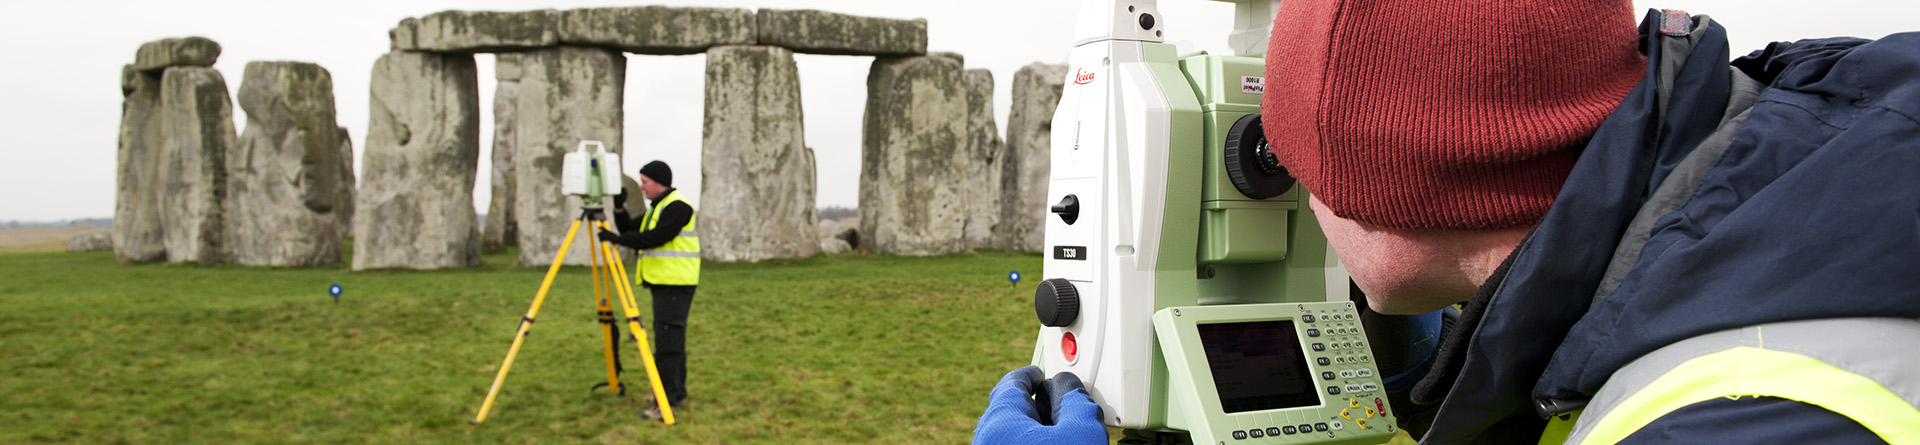 surveying standing stones at Stonehenge, Wilts